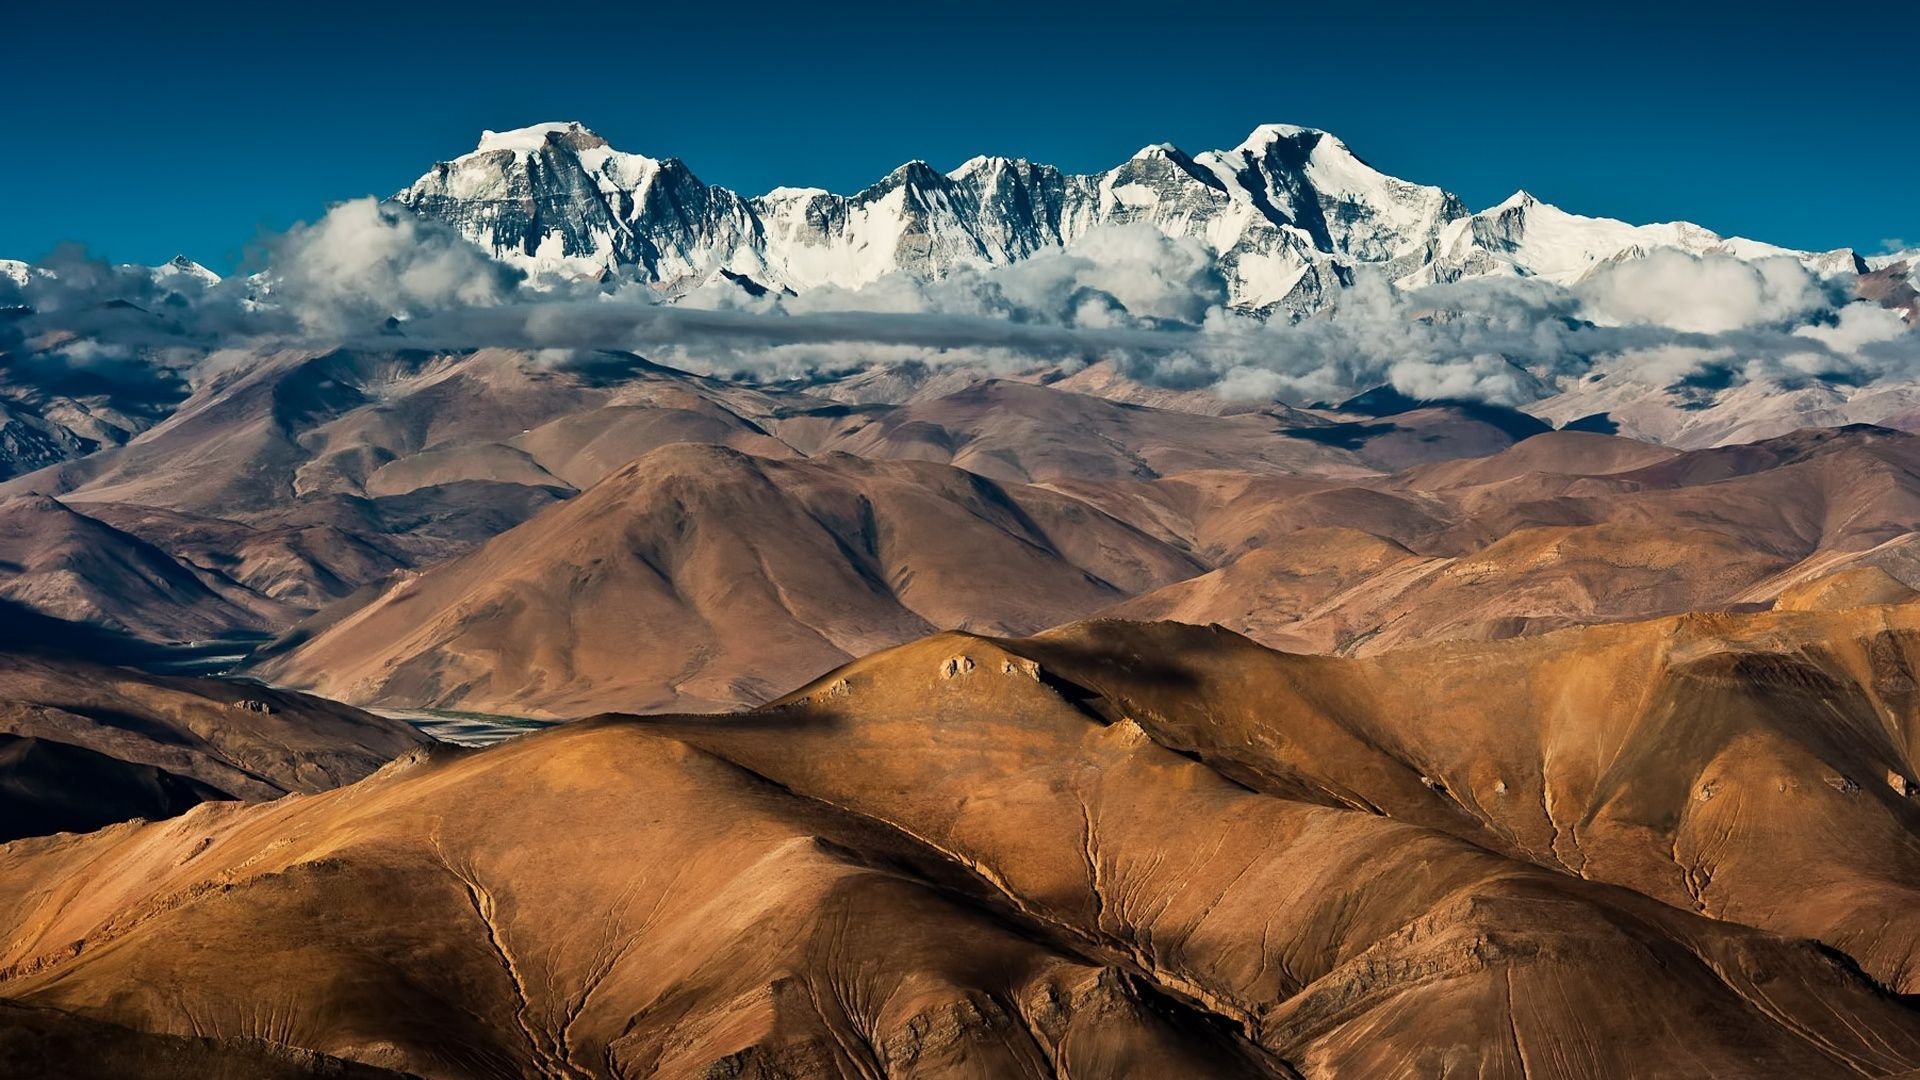 Tibetan Highlands, Landscape wallpapers, Free backgrounds, 1920x1080 Full HD Desktop